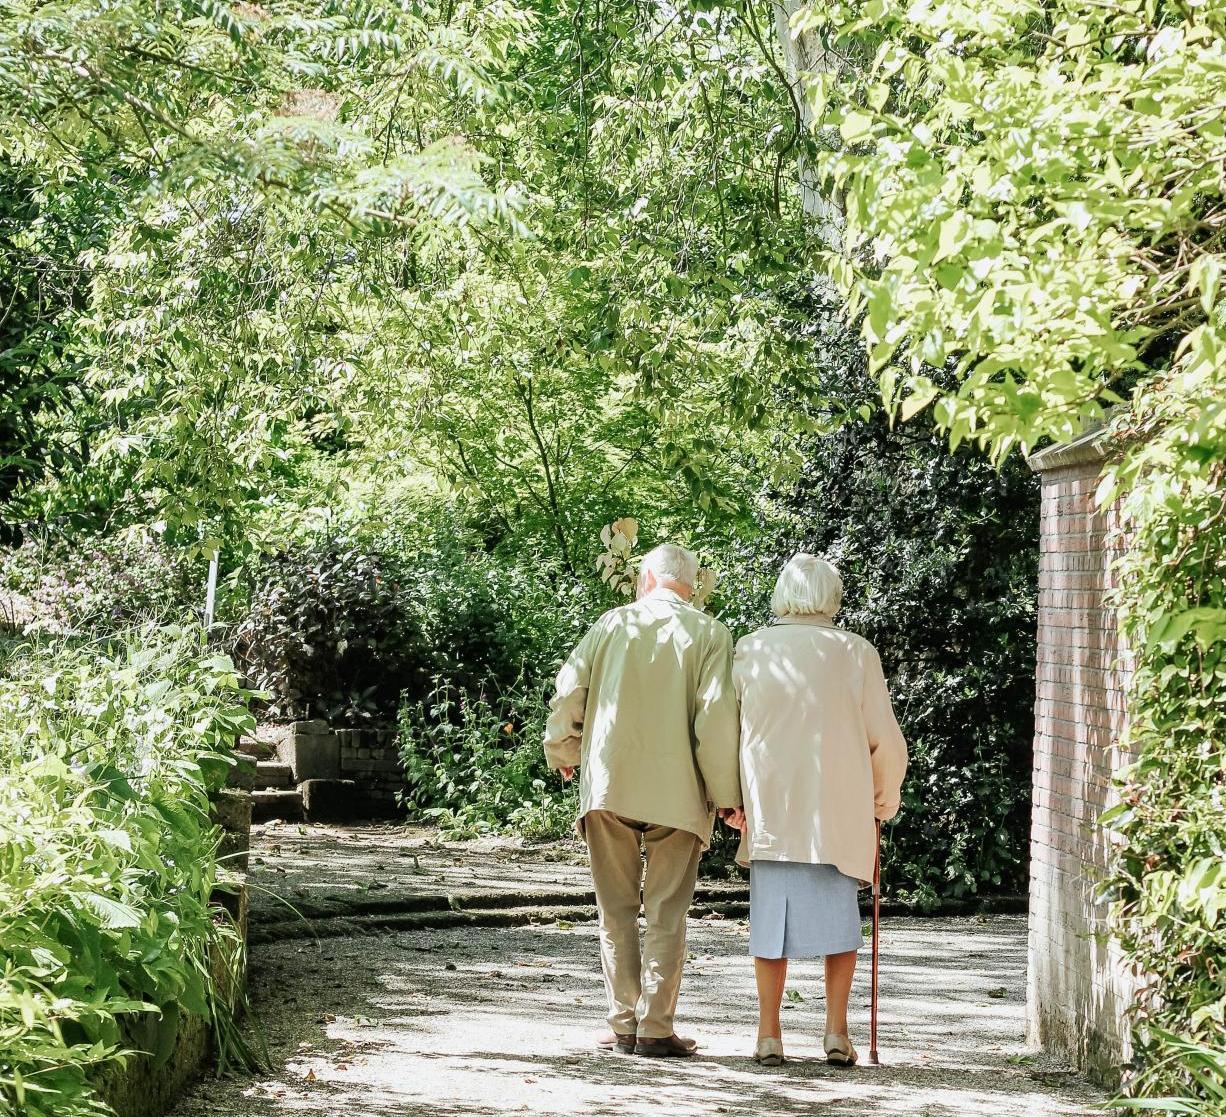 Aged Care walks